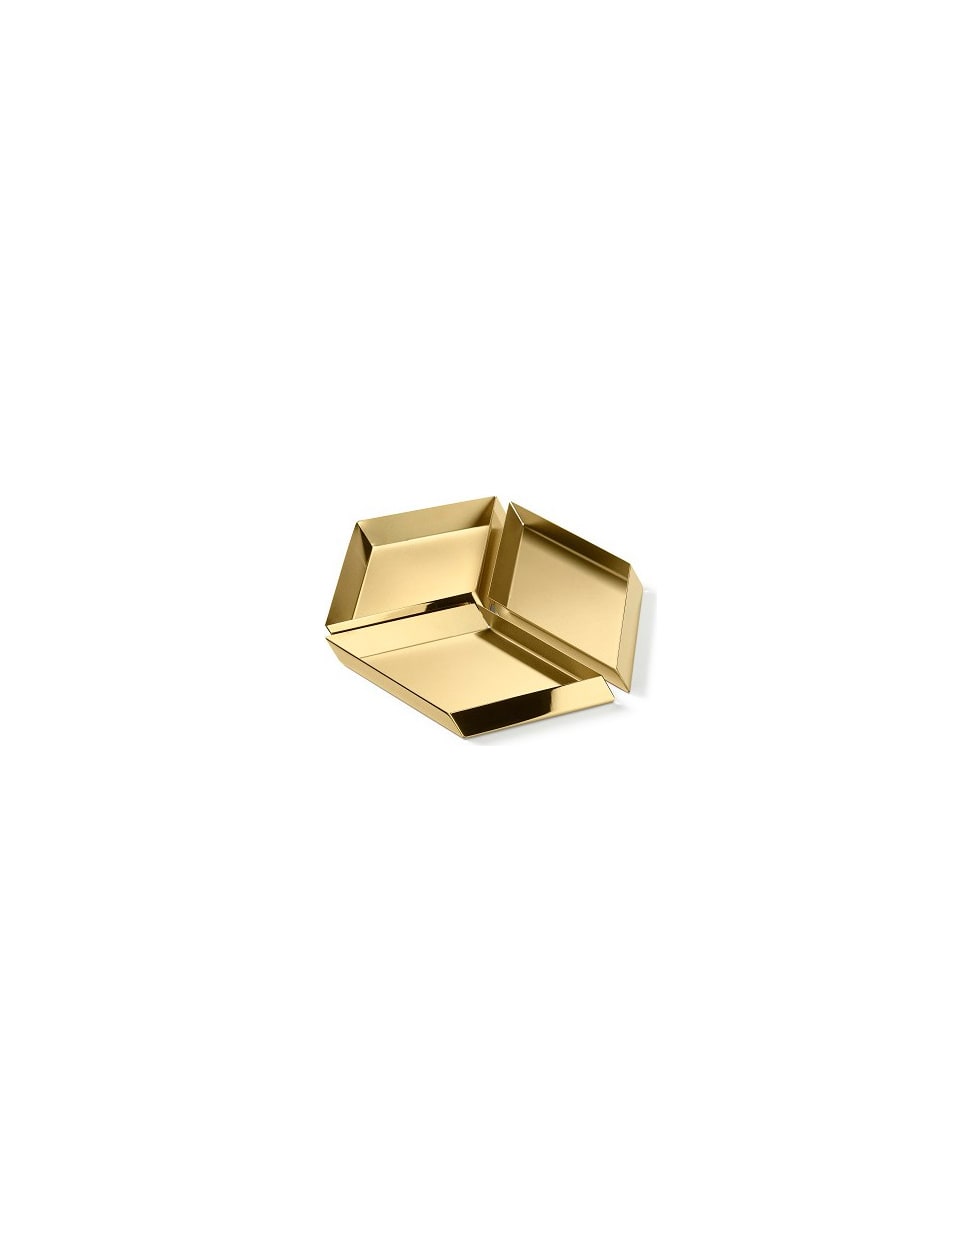 Ghidini 1961 Axonometry - Large Cube Polished Brass - Polished brass